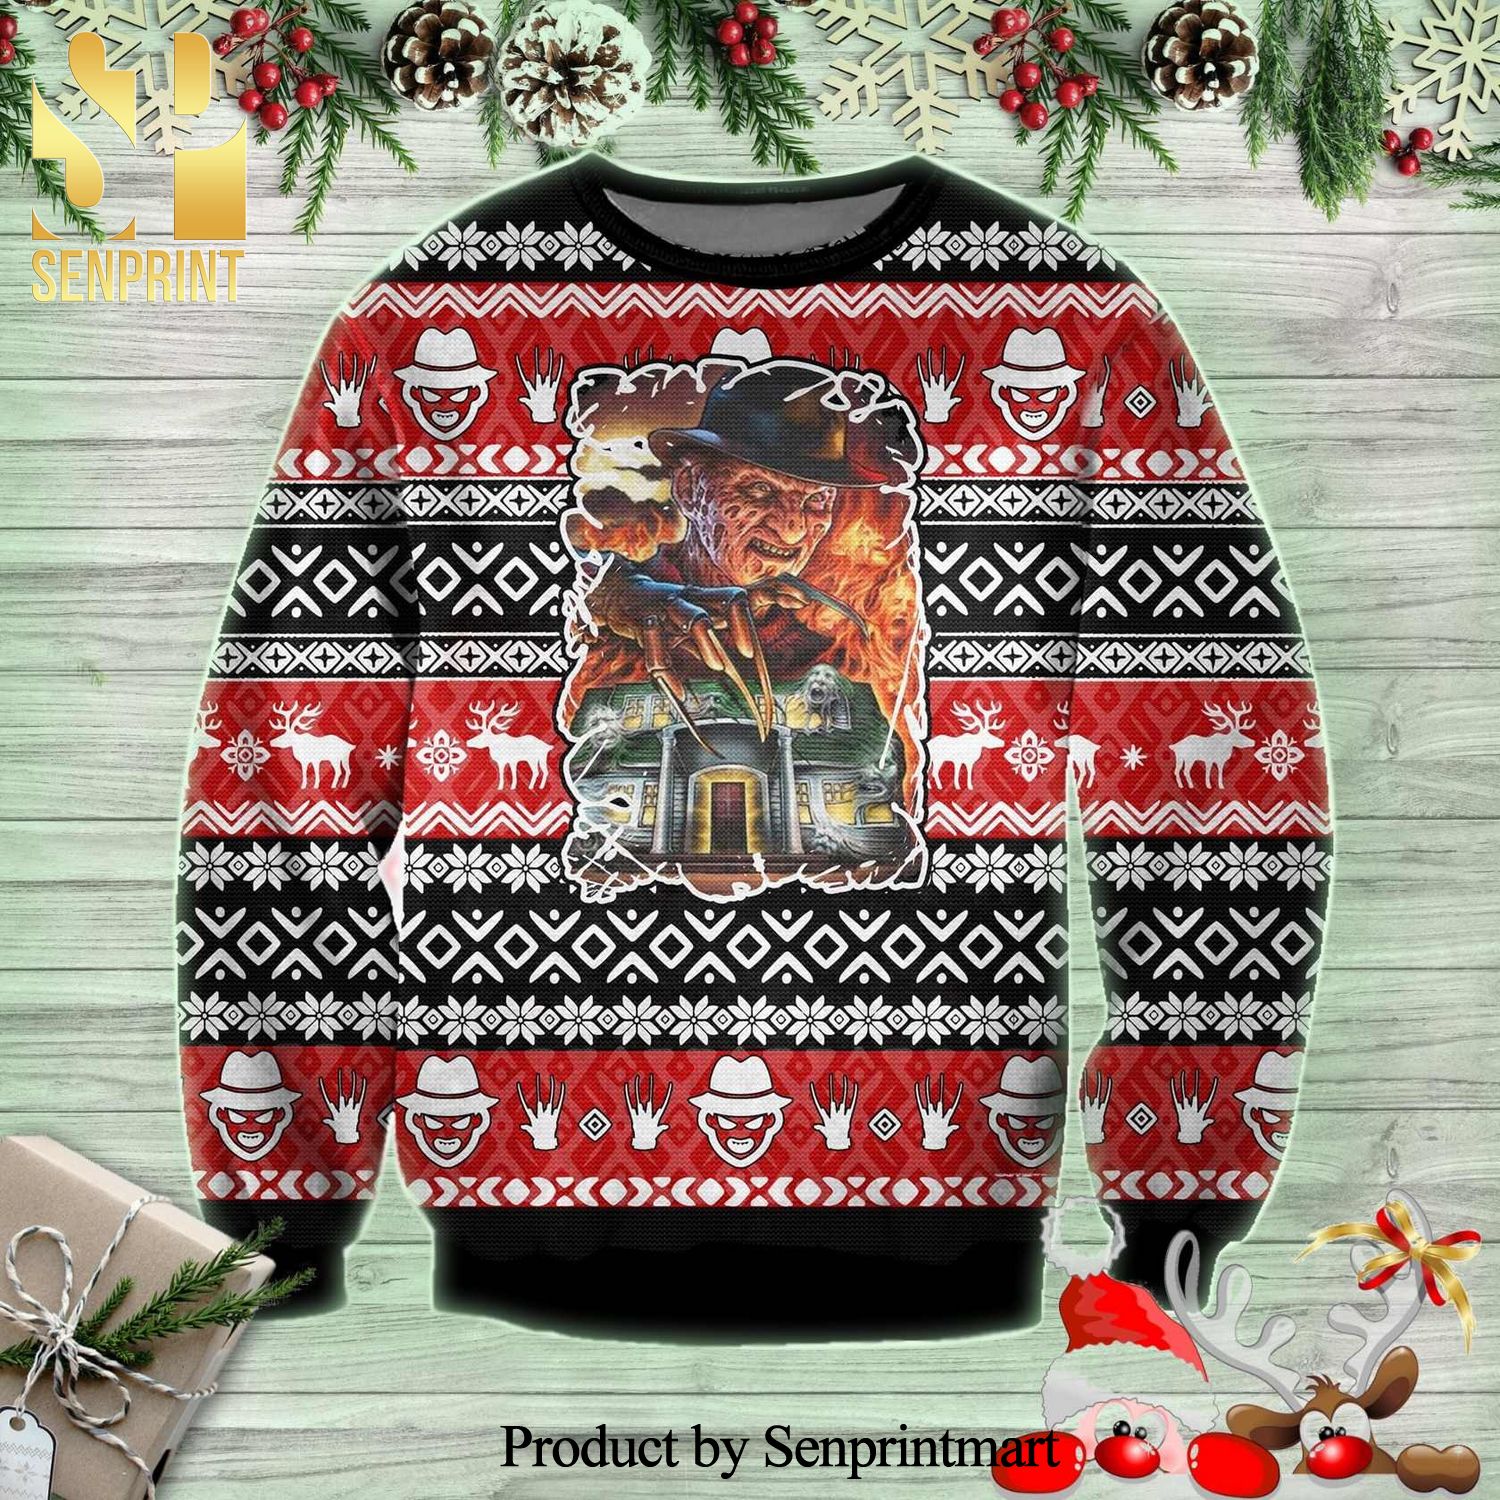 Freddy Krueger The Springwood Slasher A Nightmare on Elm Street Horror Movie Knitted Ugly Christmas Sweater